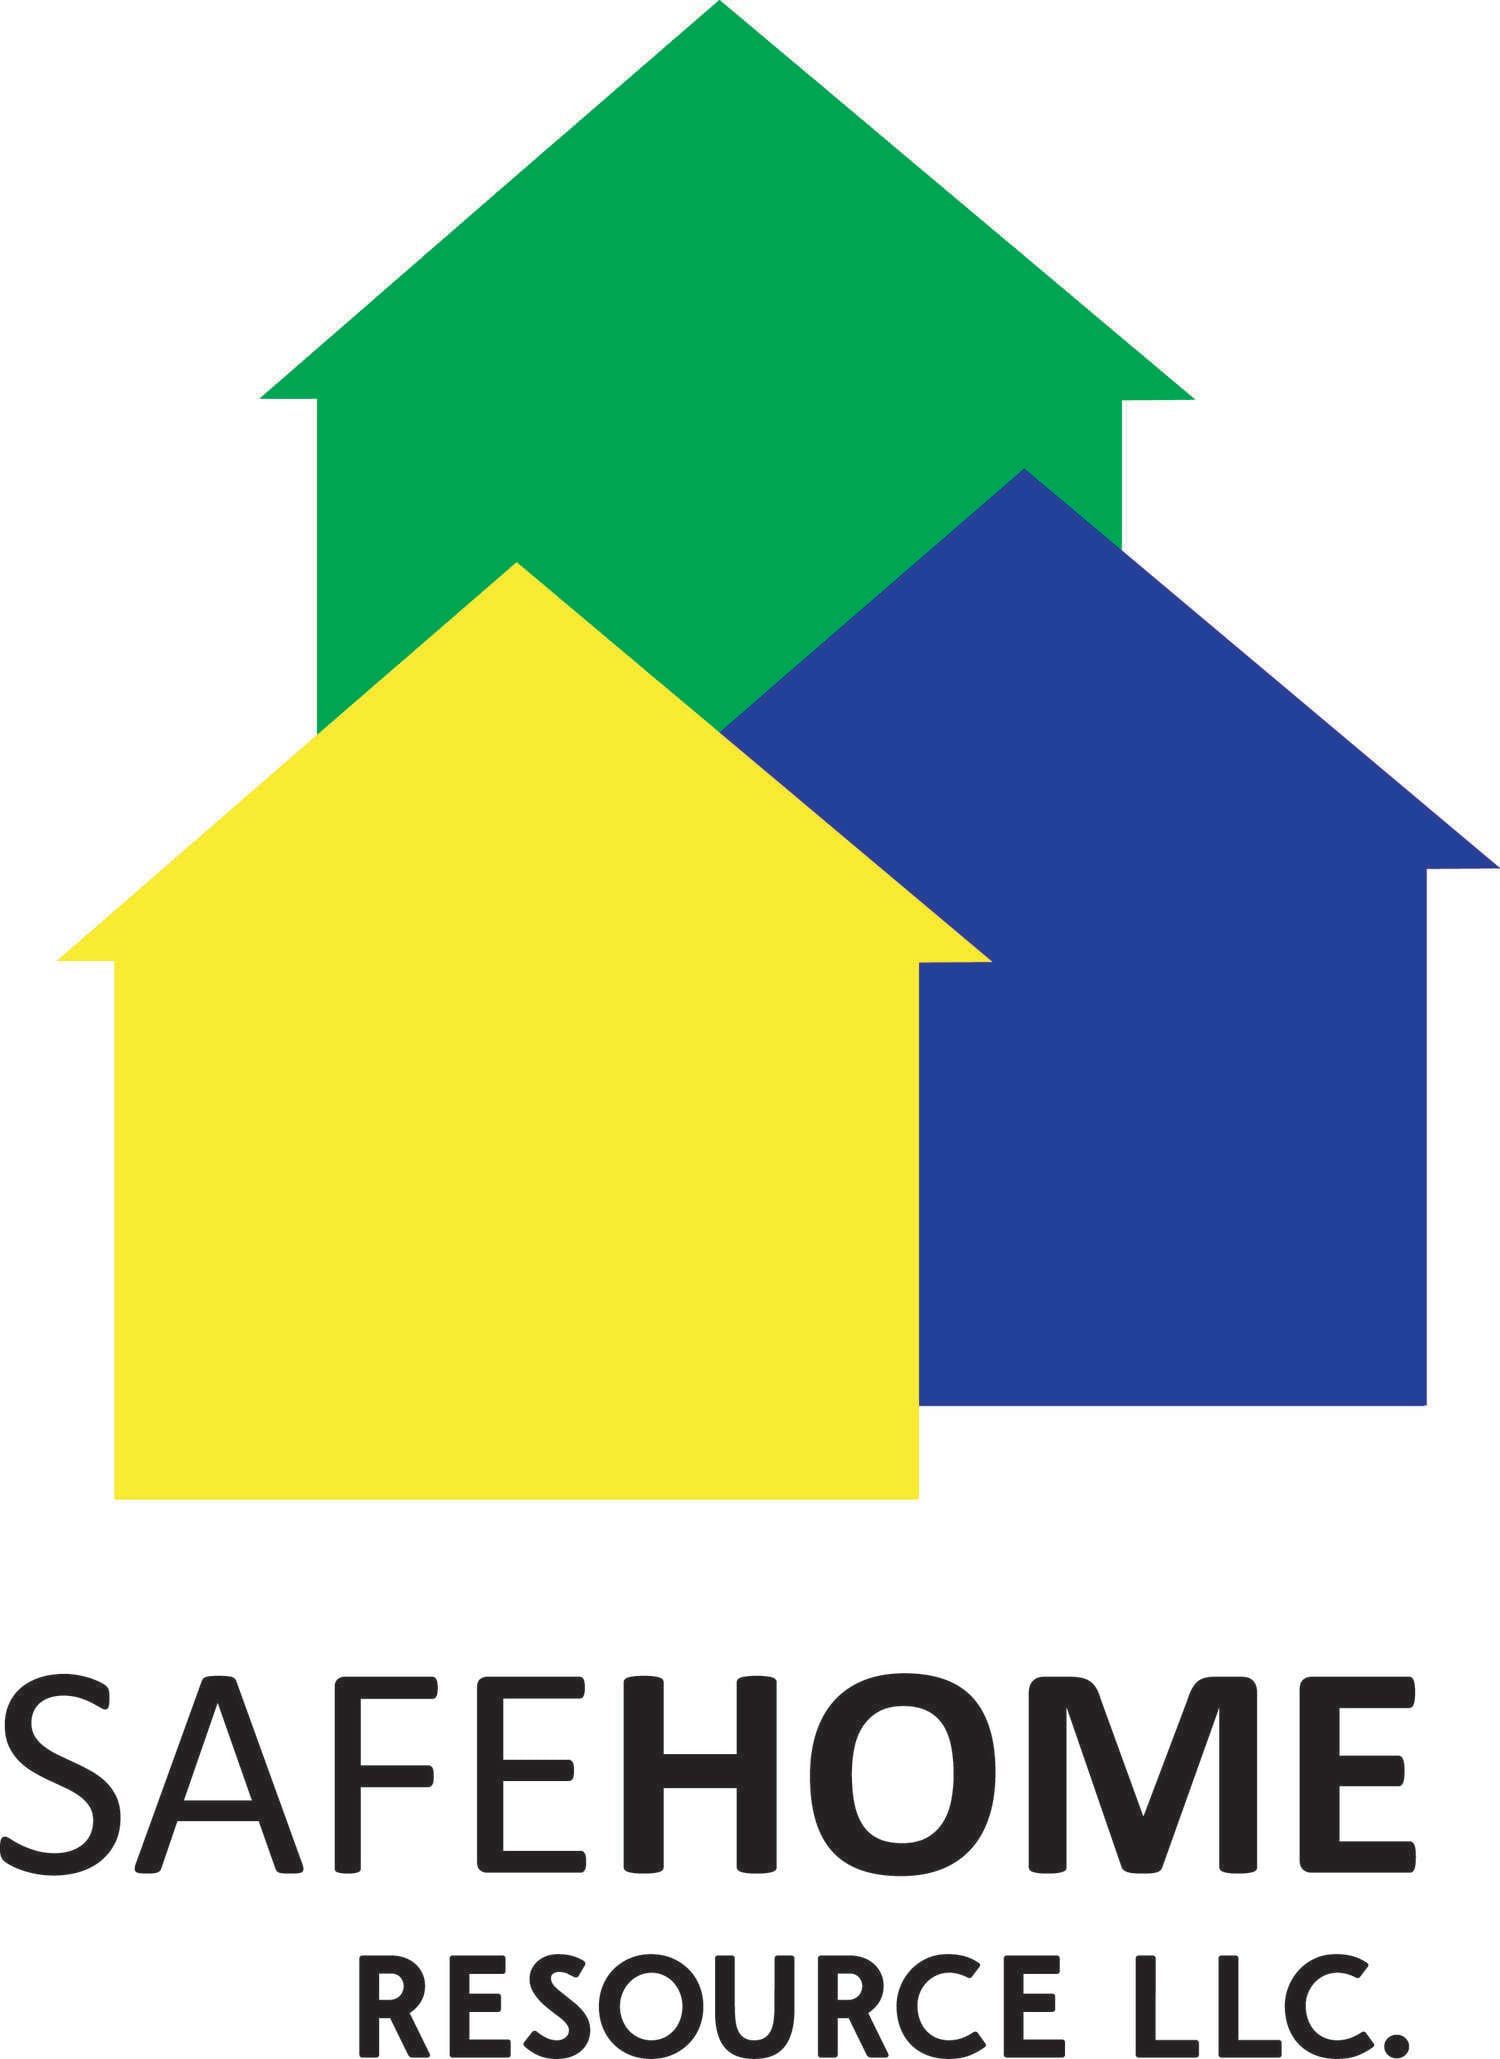 Safer Home Services LLC Reviews & Experiences